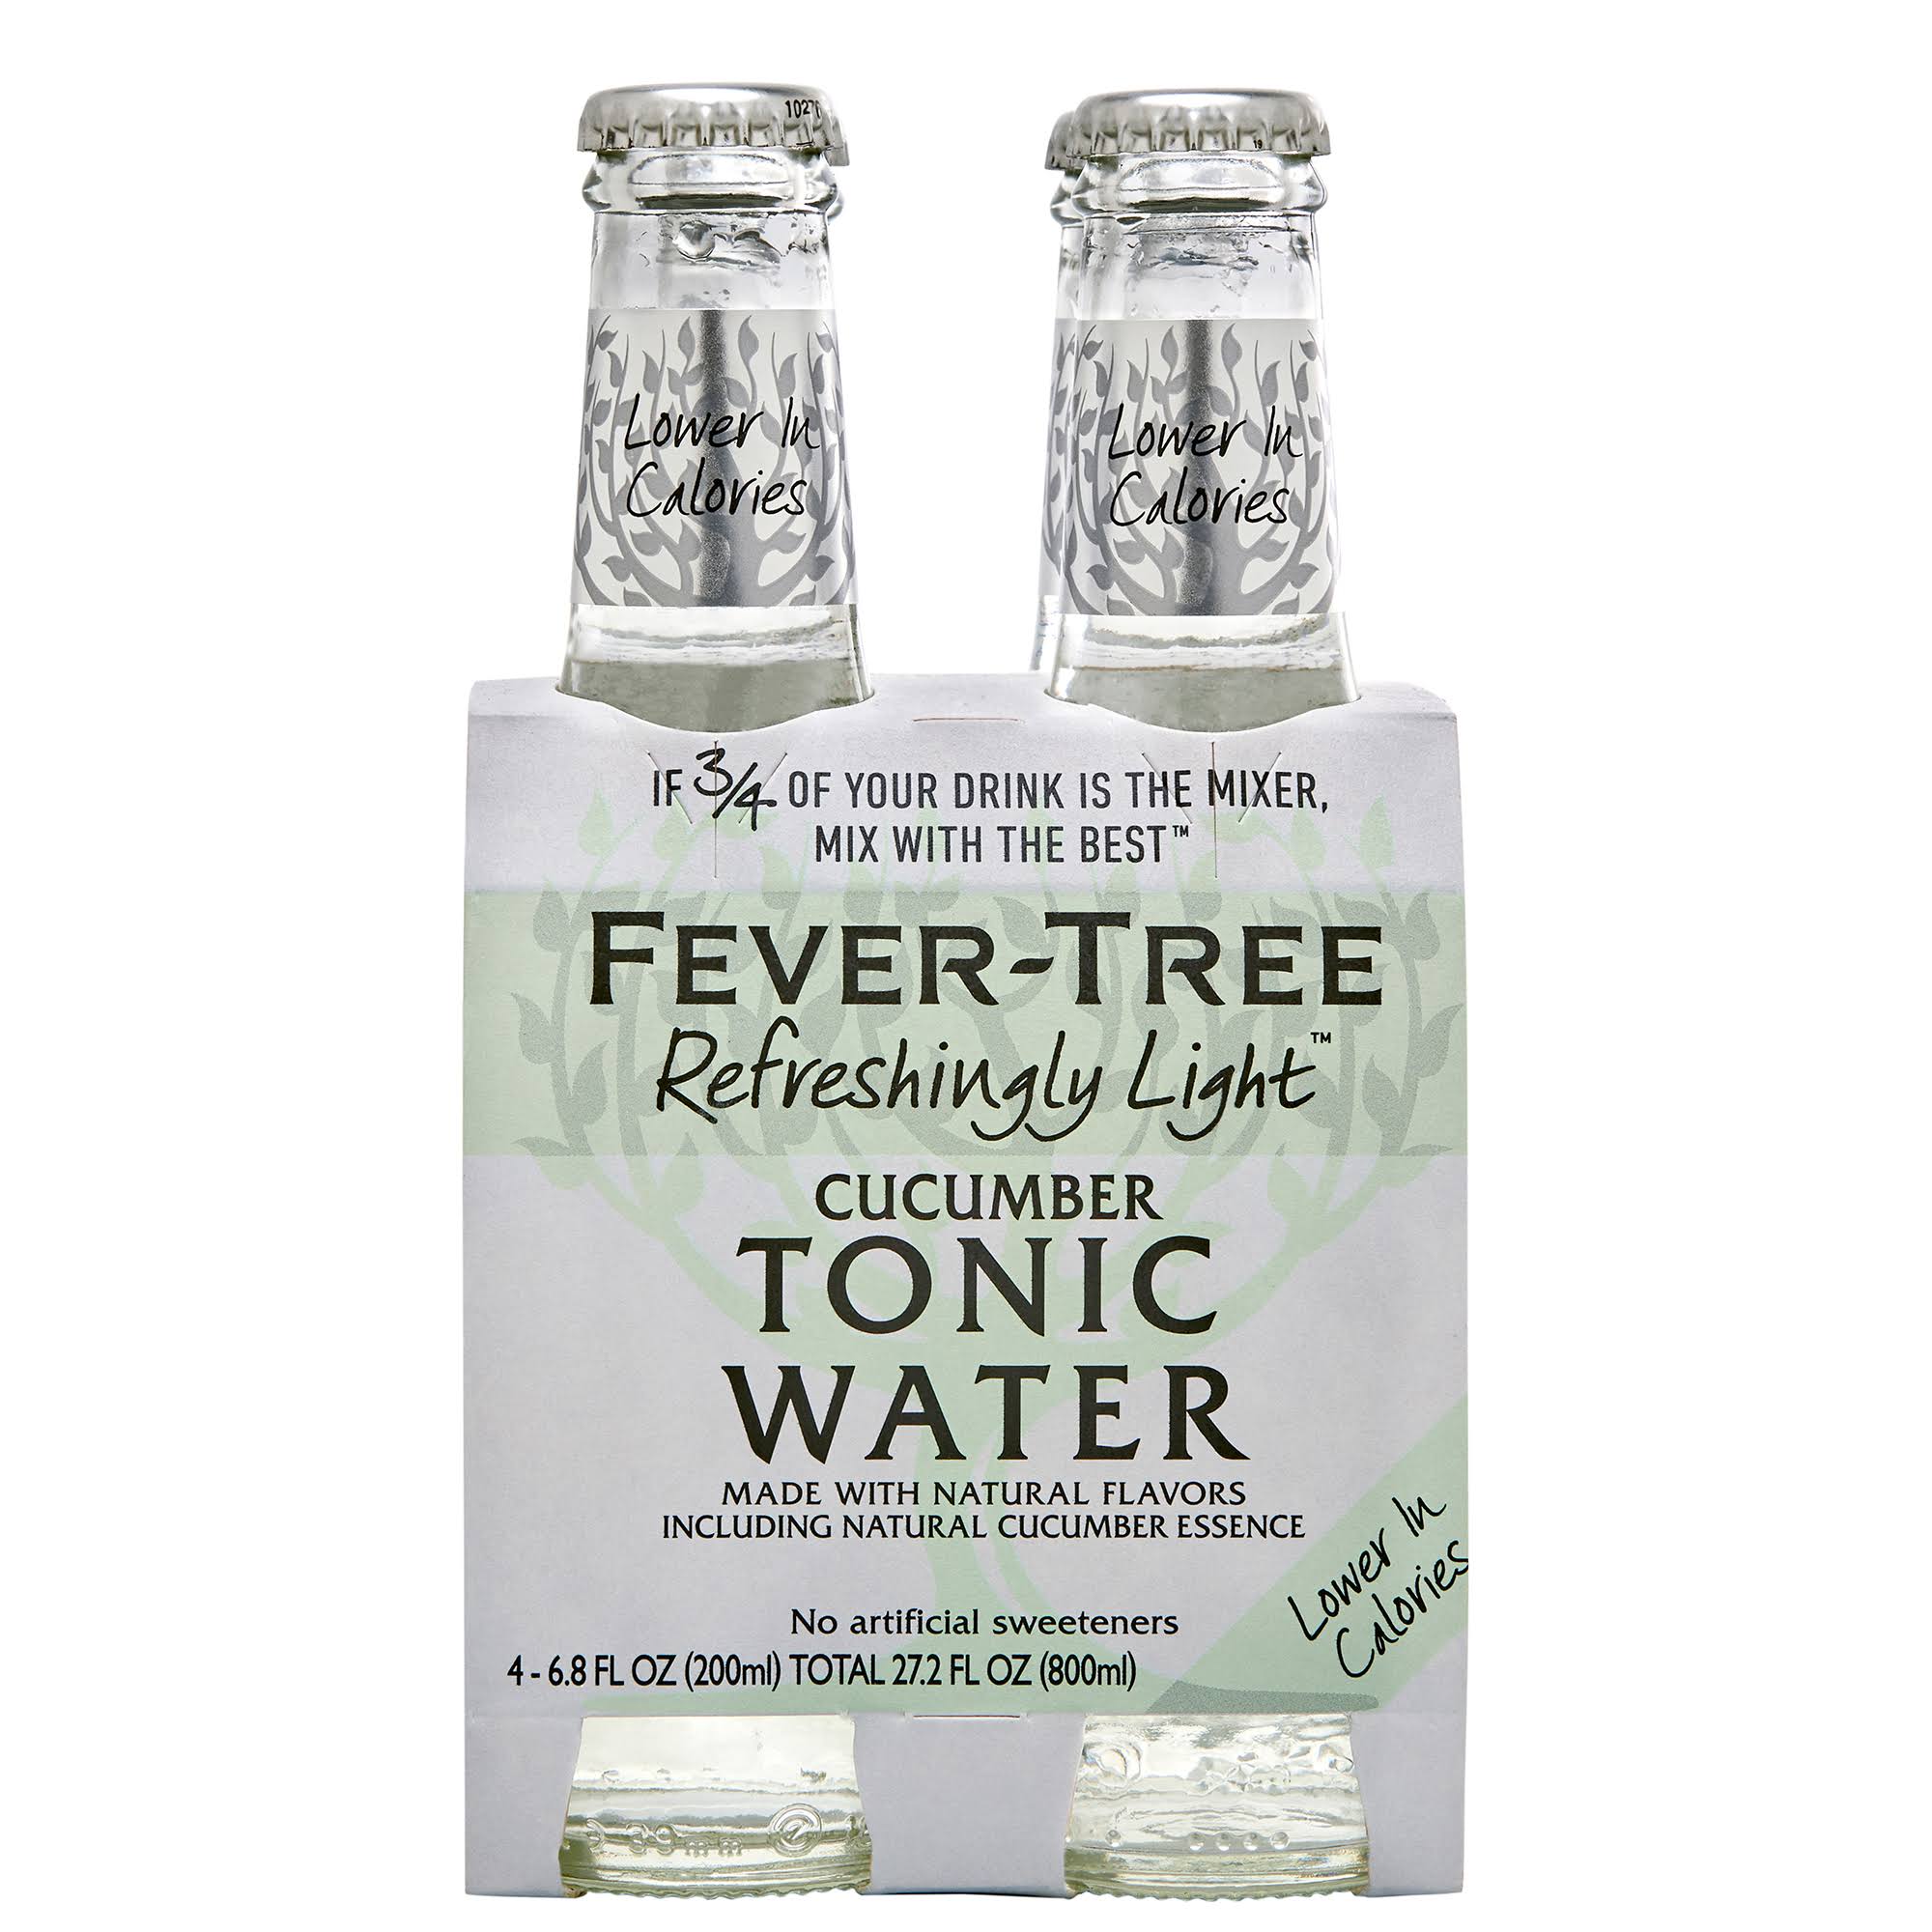 Fever Tree Tonic Water, Cucumber - 4 pack, 6.8 fl oz bottles